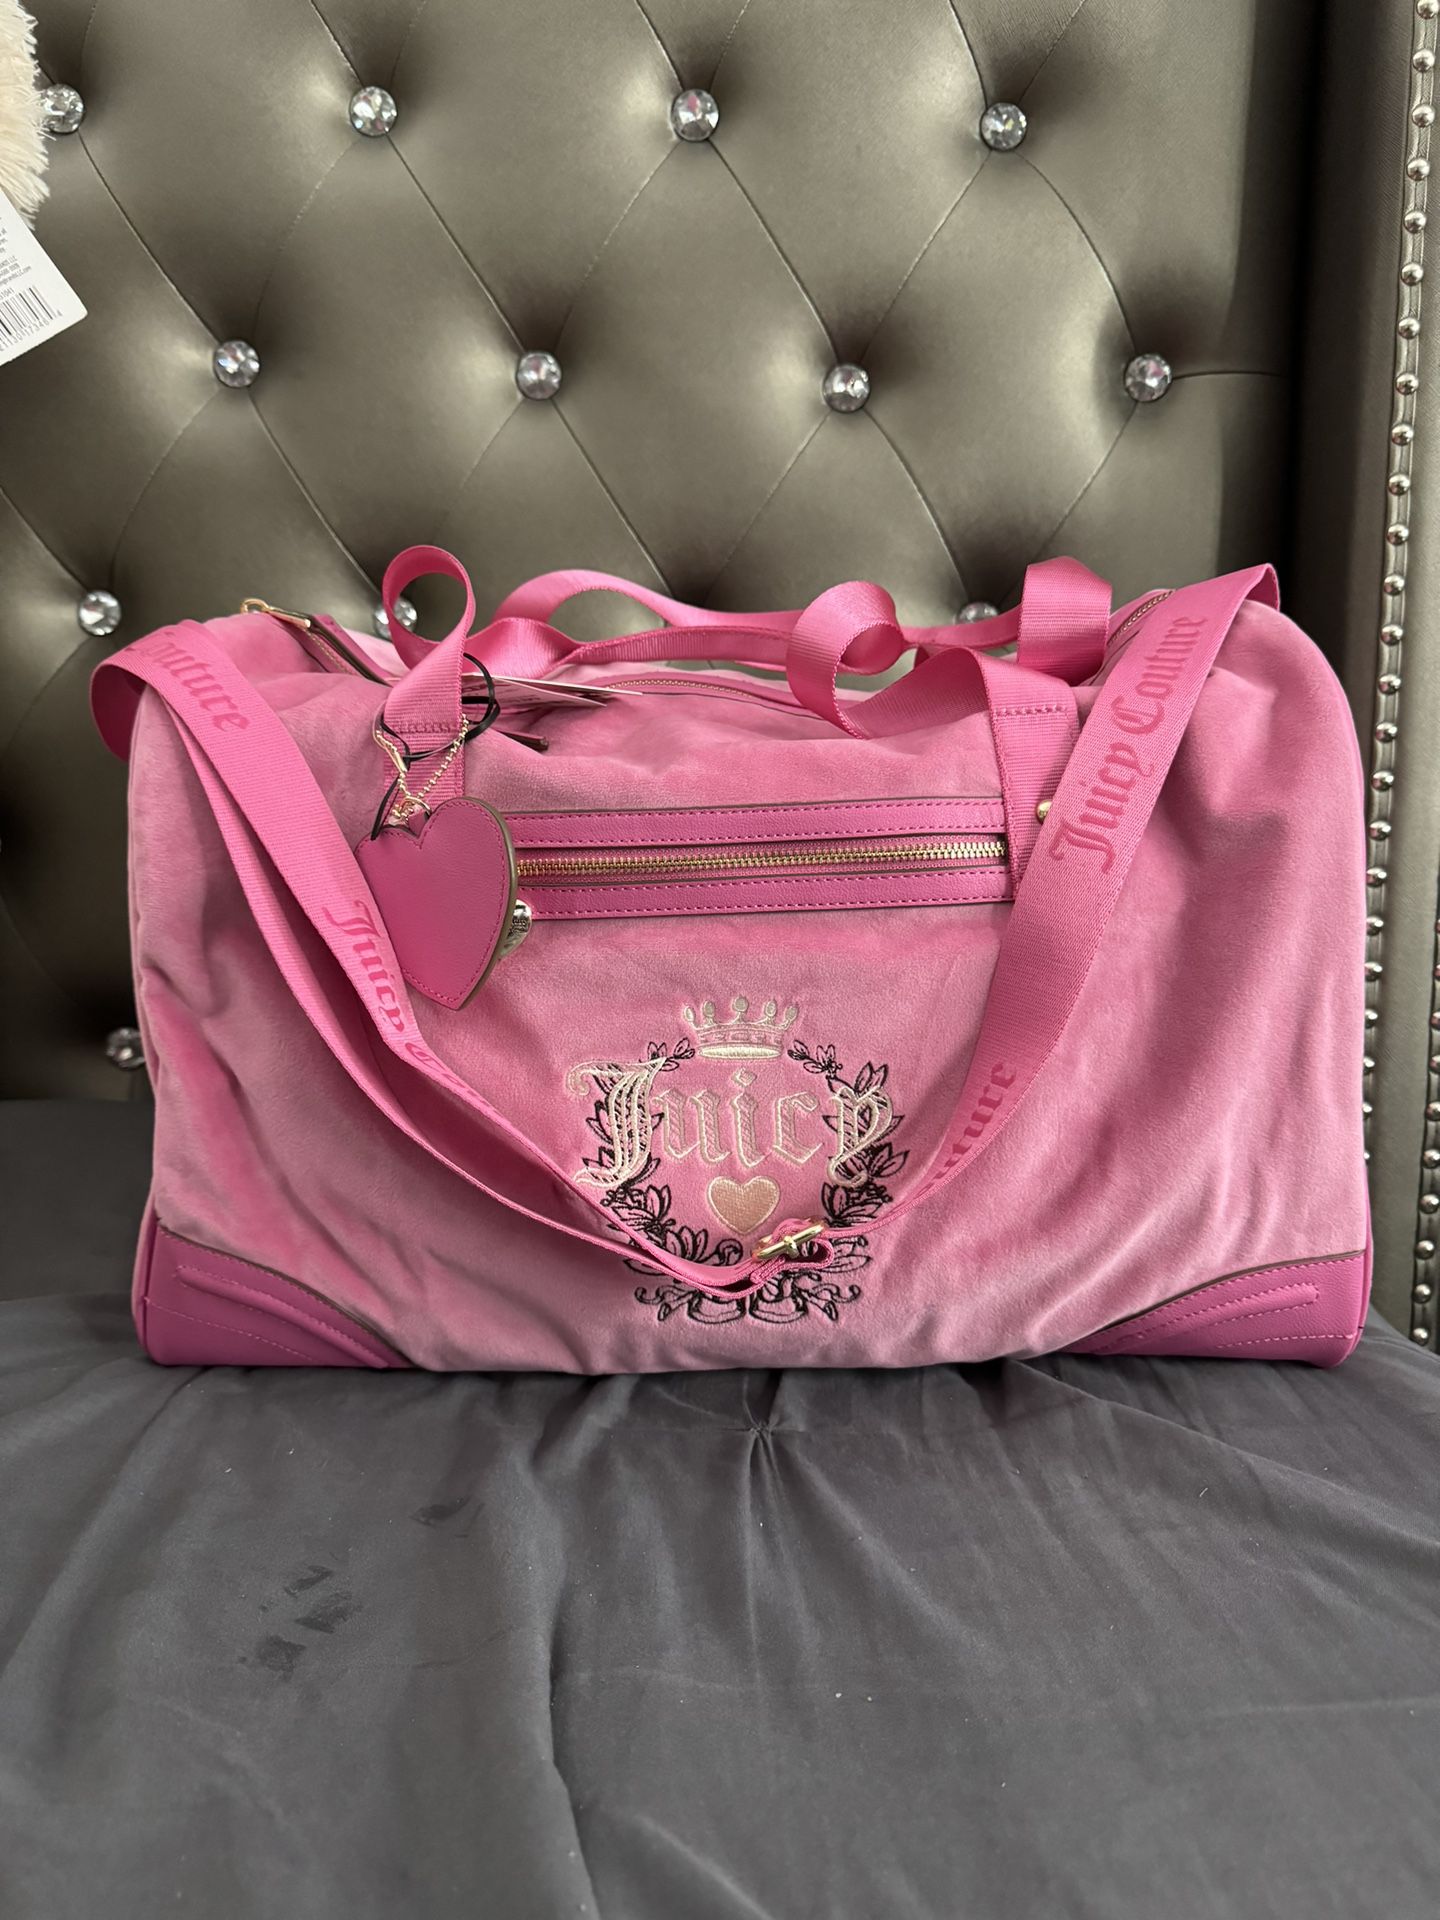 Juicy Couture Duffel Bag